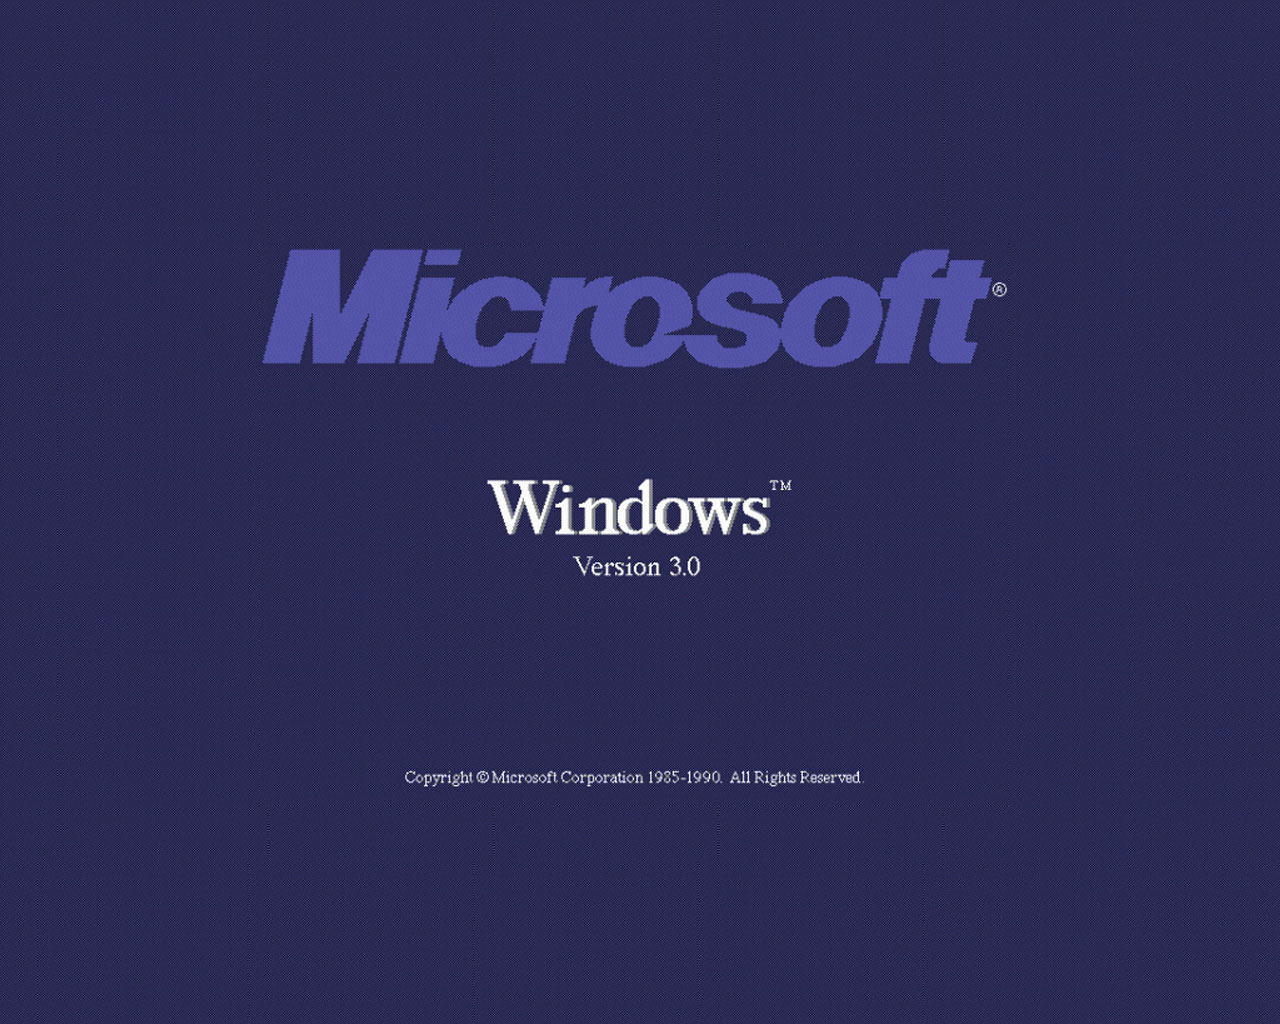 NotSmartBlog Microsoft Windows